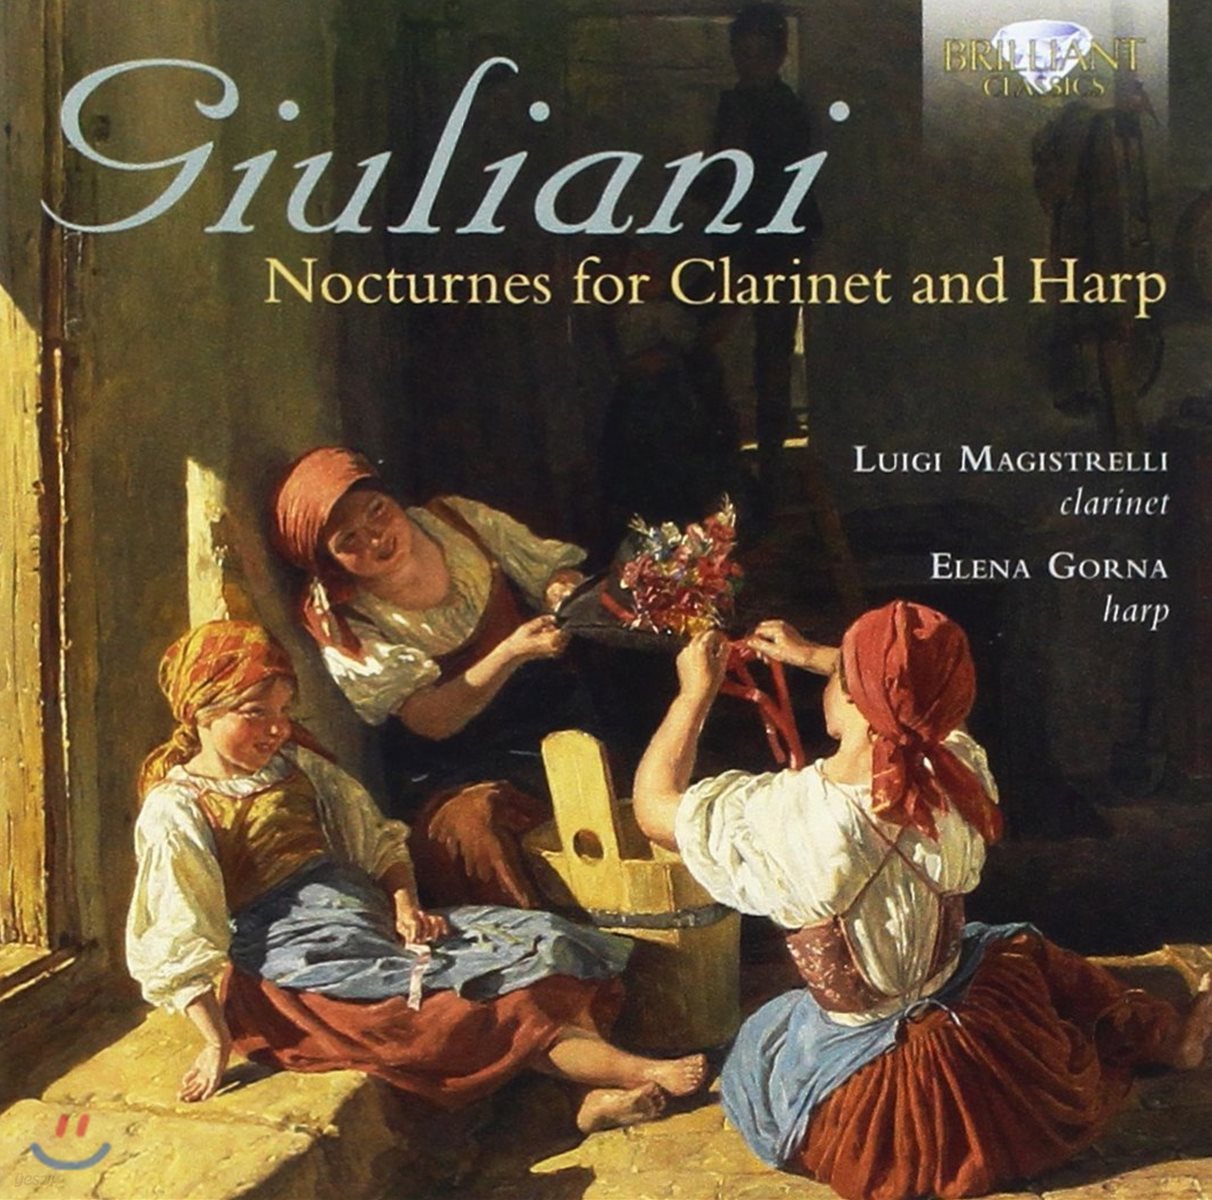 Luigi Magistrelli / Elena Gorna 줄리아니: 클라리넷과 하프를 위한 열두 개의 녹턴 - 루이지 마지스트렐리, 엘레나 고르나 (Giovanni Francesco Giuliani: 12 Nocturnes for Clarinet and Harp)